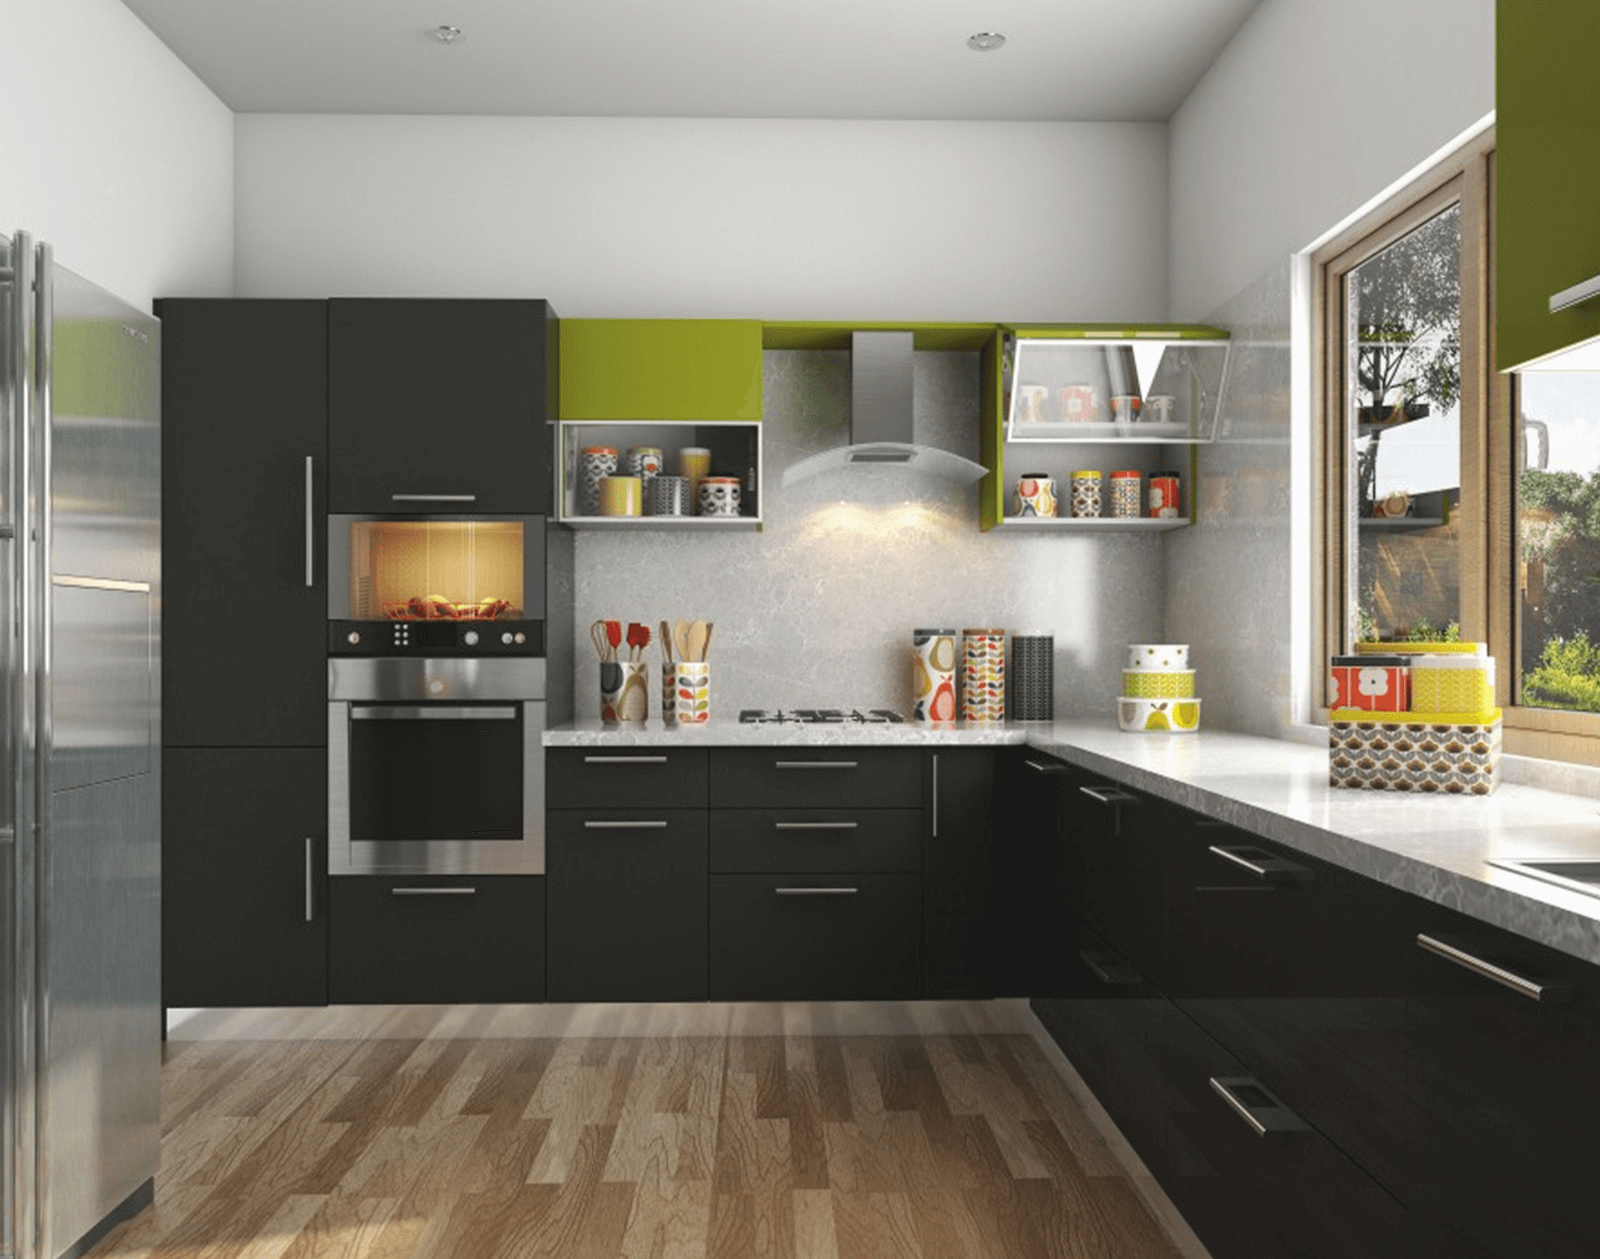 modular kitchen designs in kerala